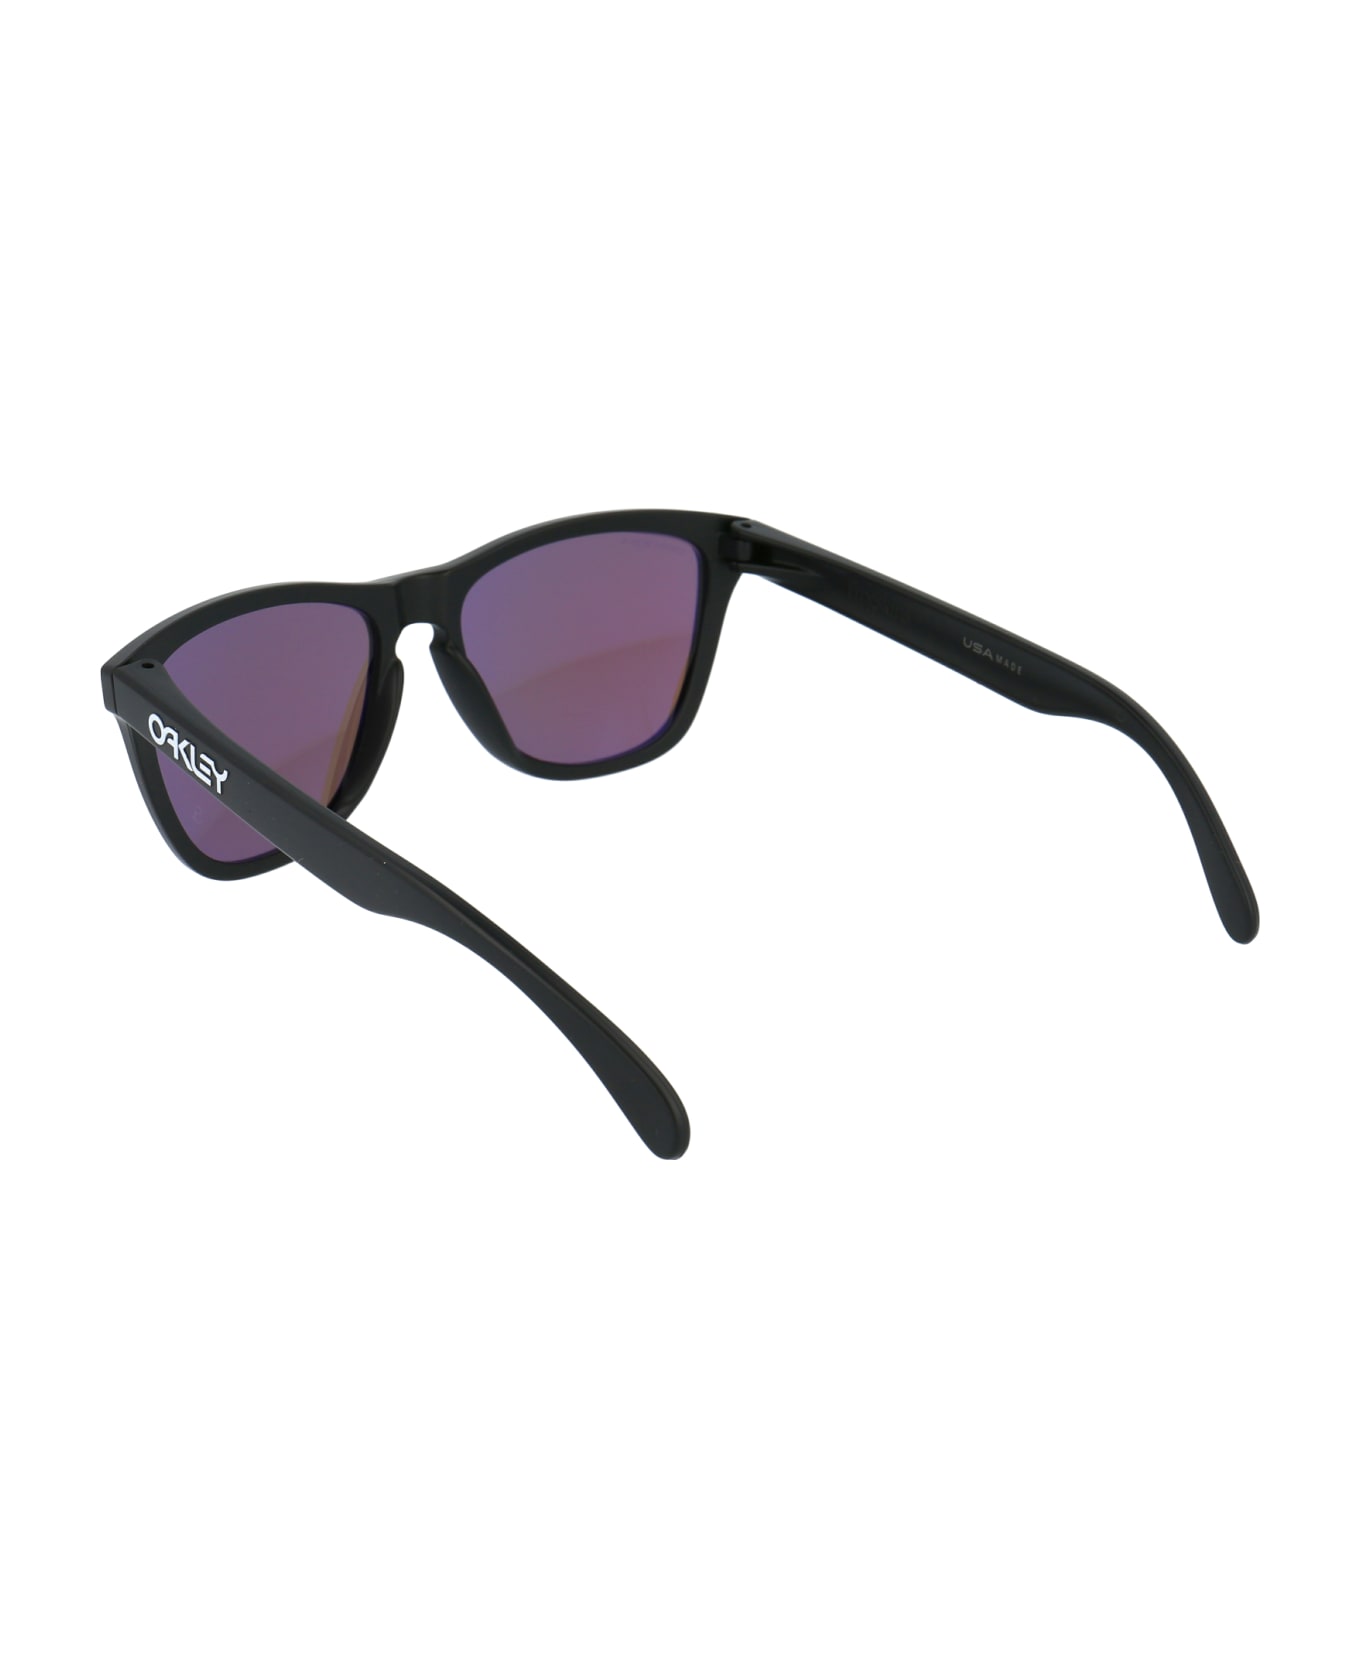 Oakley Frogskins Sunglasses サングラス